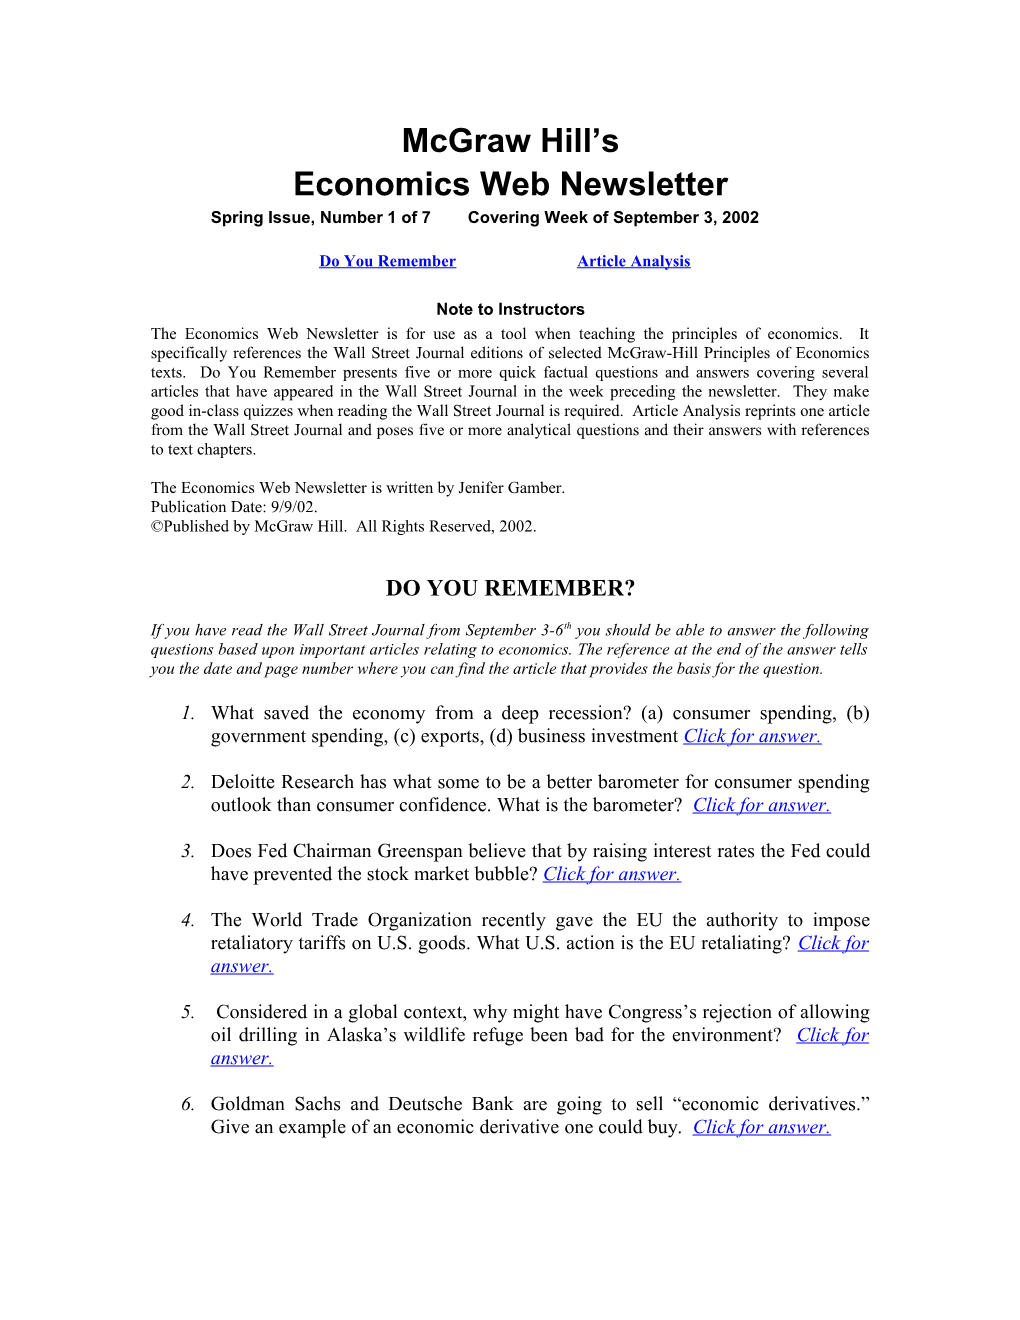 Economics Web Newsletter s1